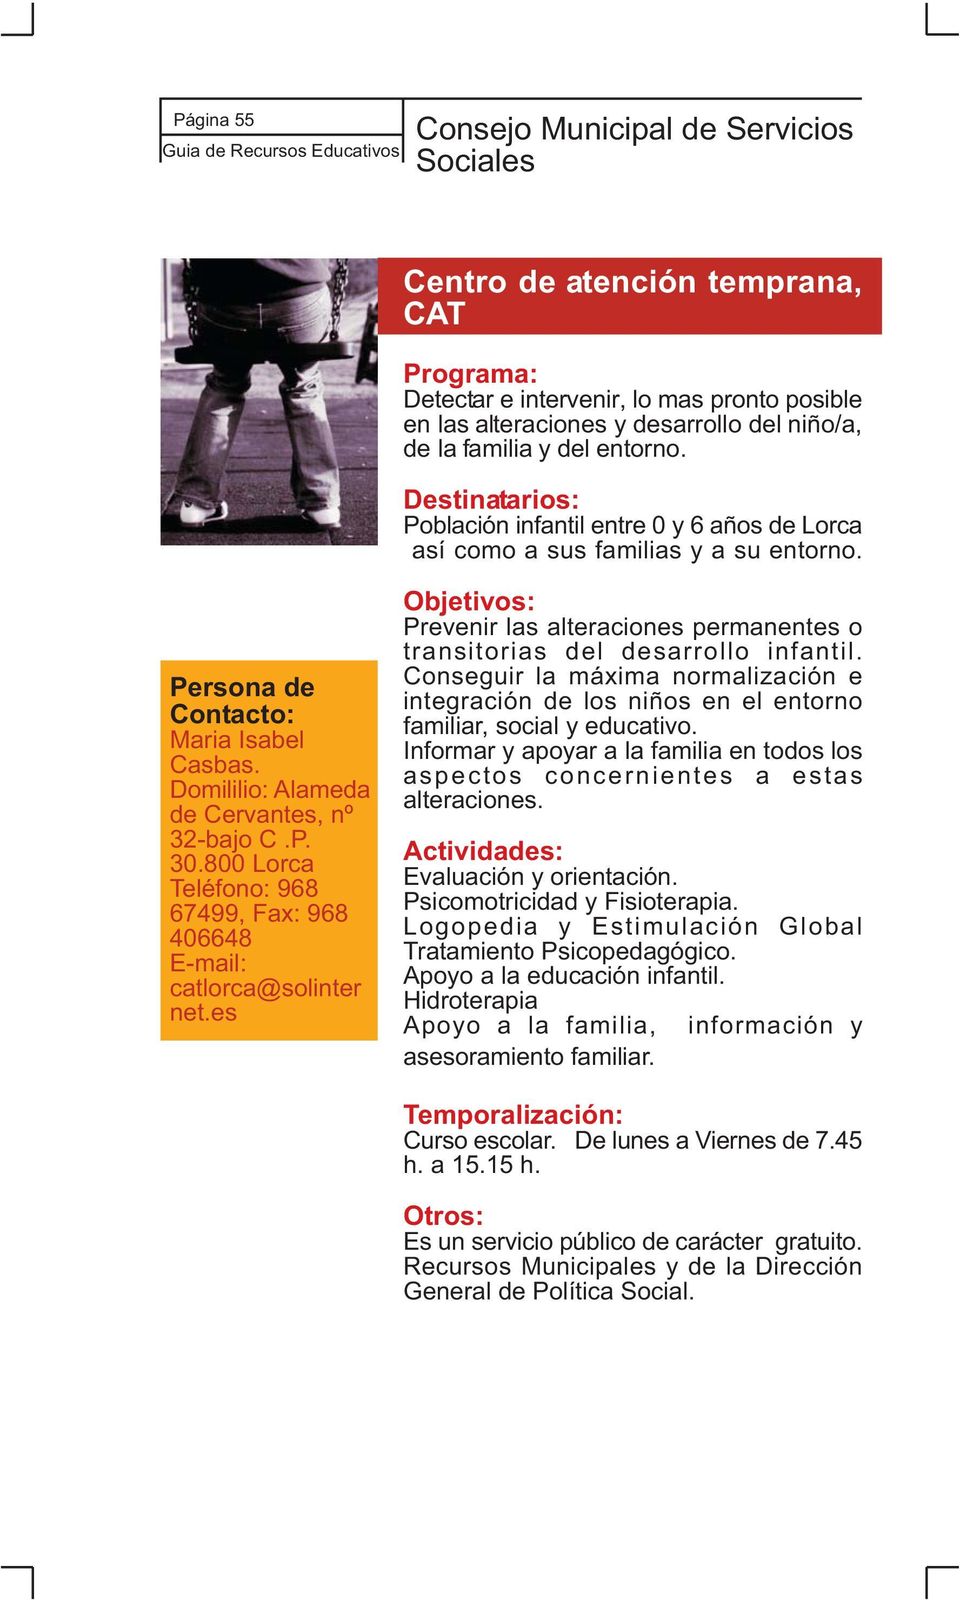 800 Lorca Teléfono: 968 67499, Fax: 968 406648 E-mail: catlorca@solinter net.es Prevenir las alteraciones permanentes o transitorias del desarrollo infantil.